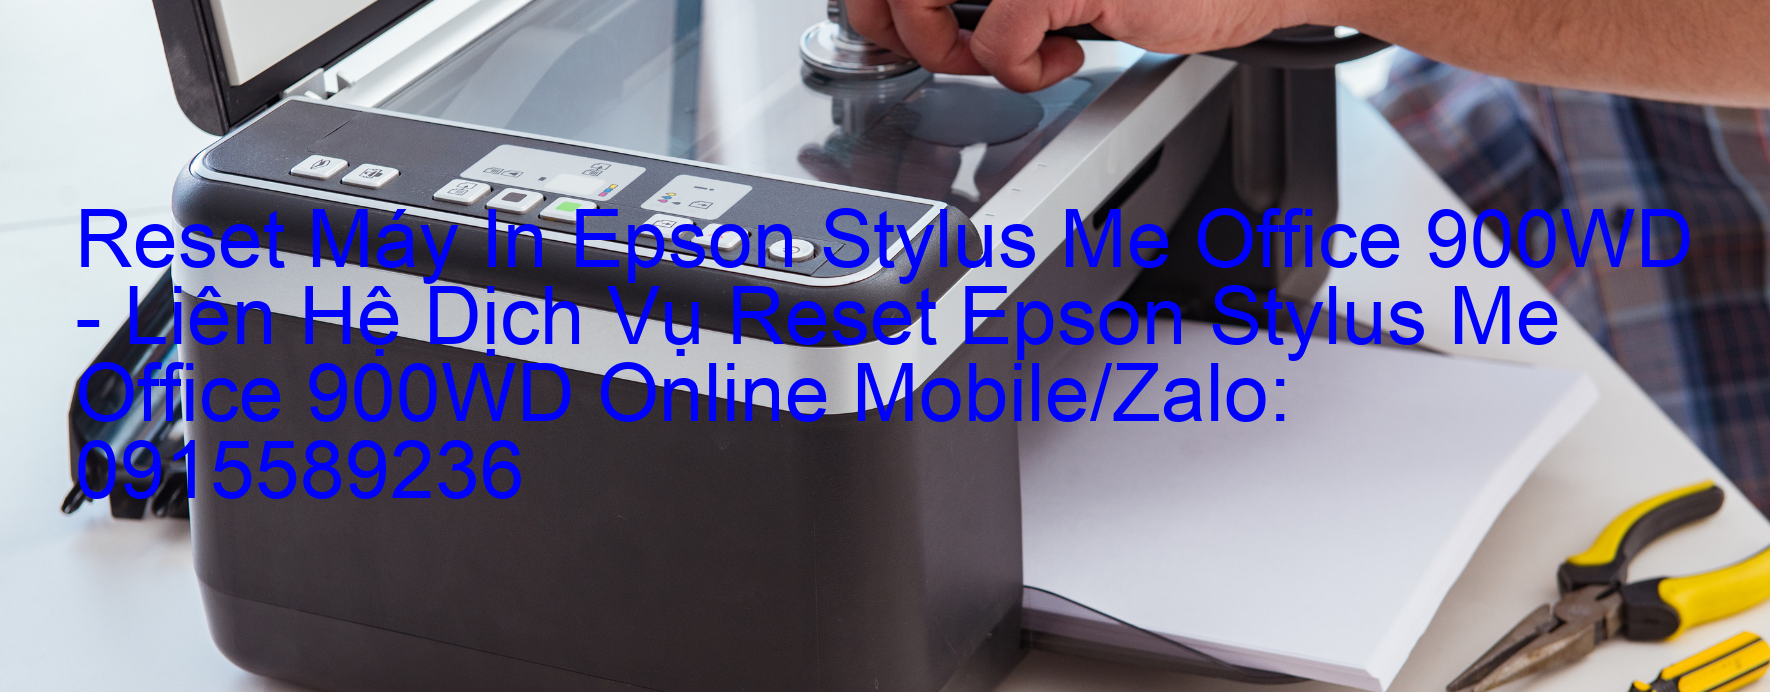 Reset Máy In Epson Stylus Me Office 900WD Online